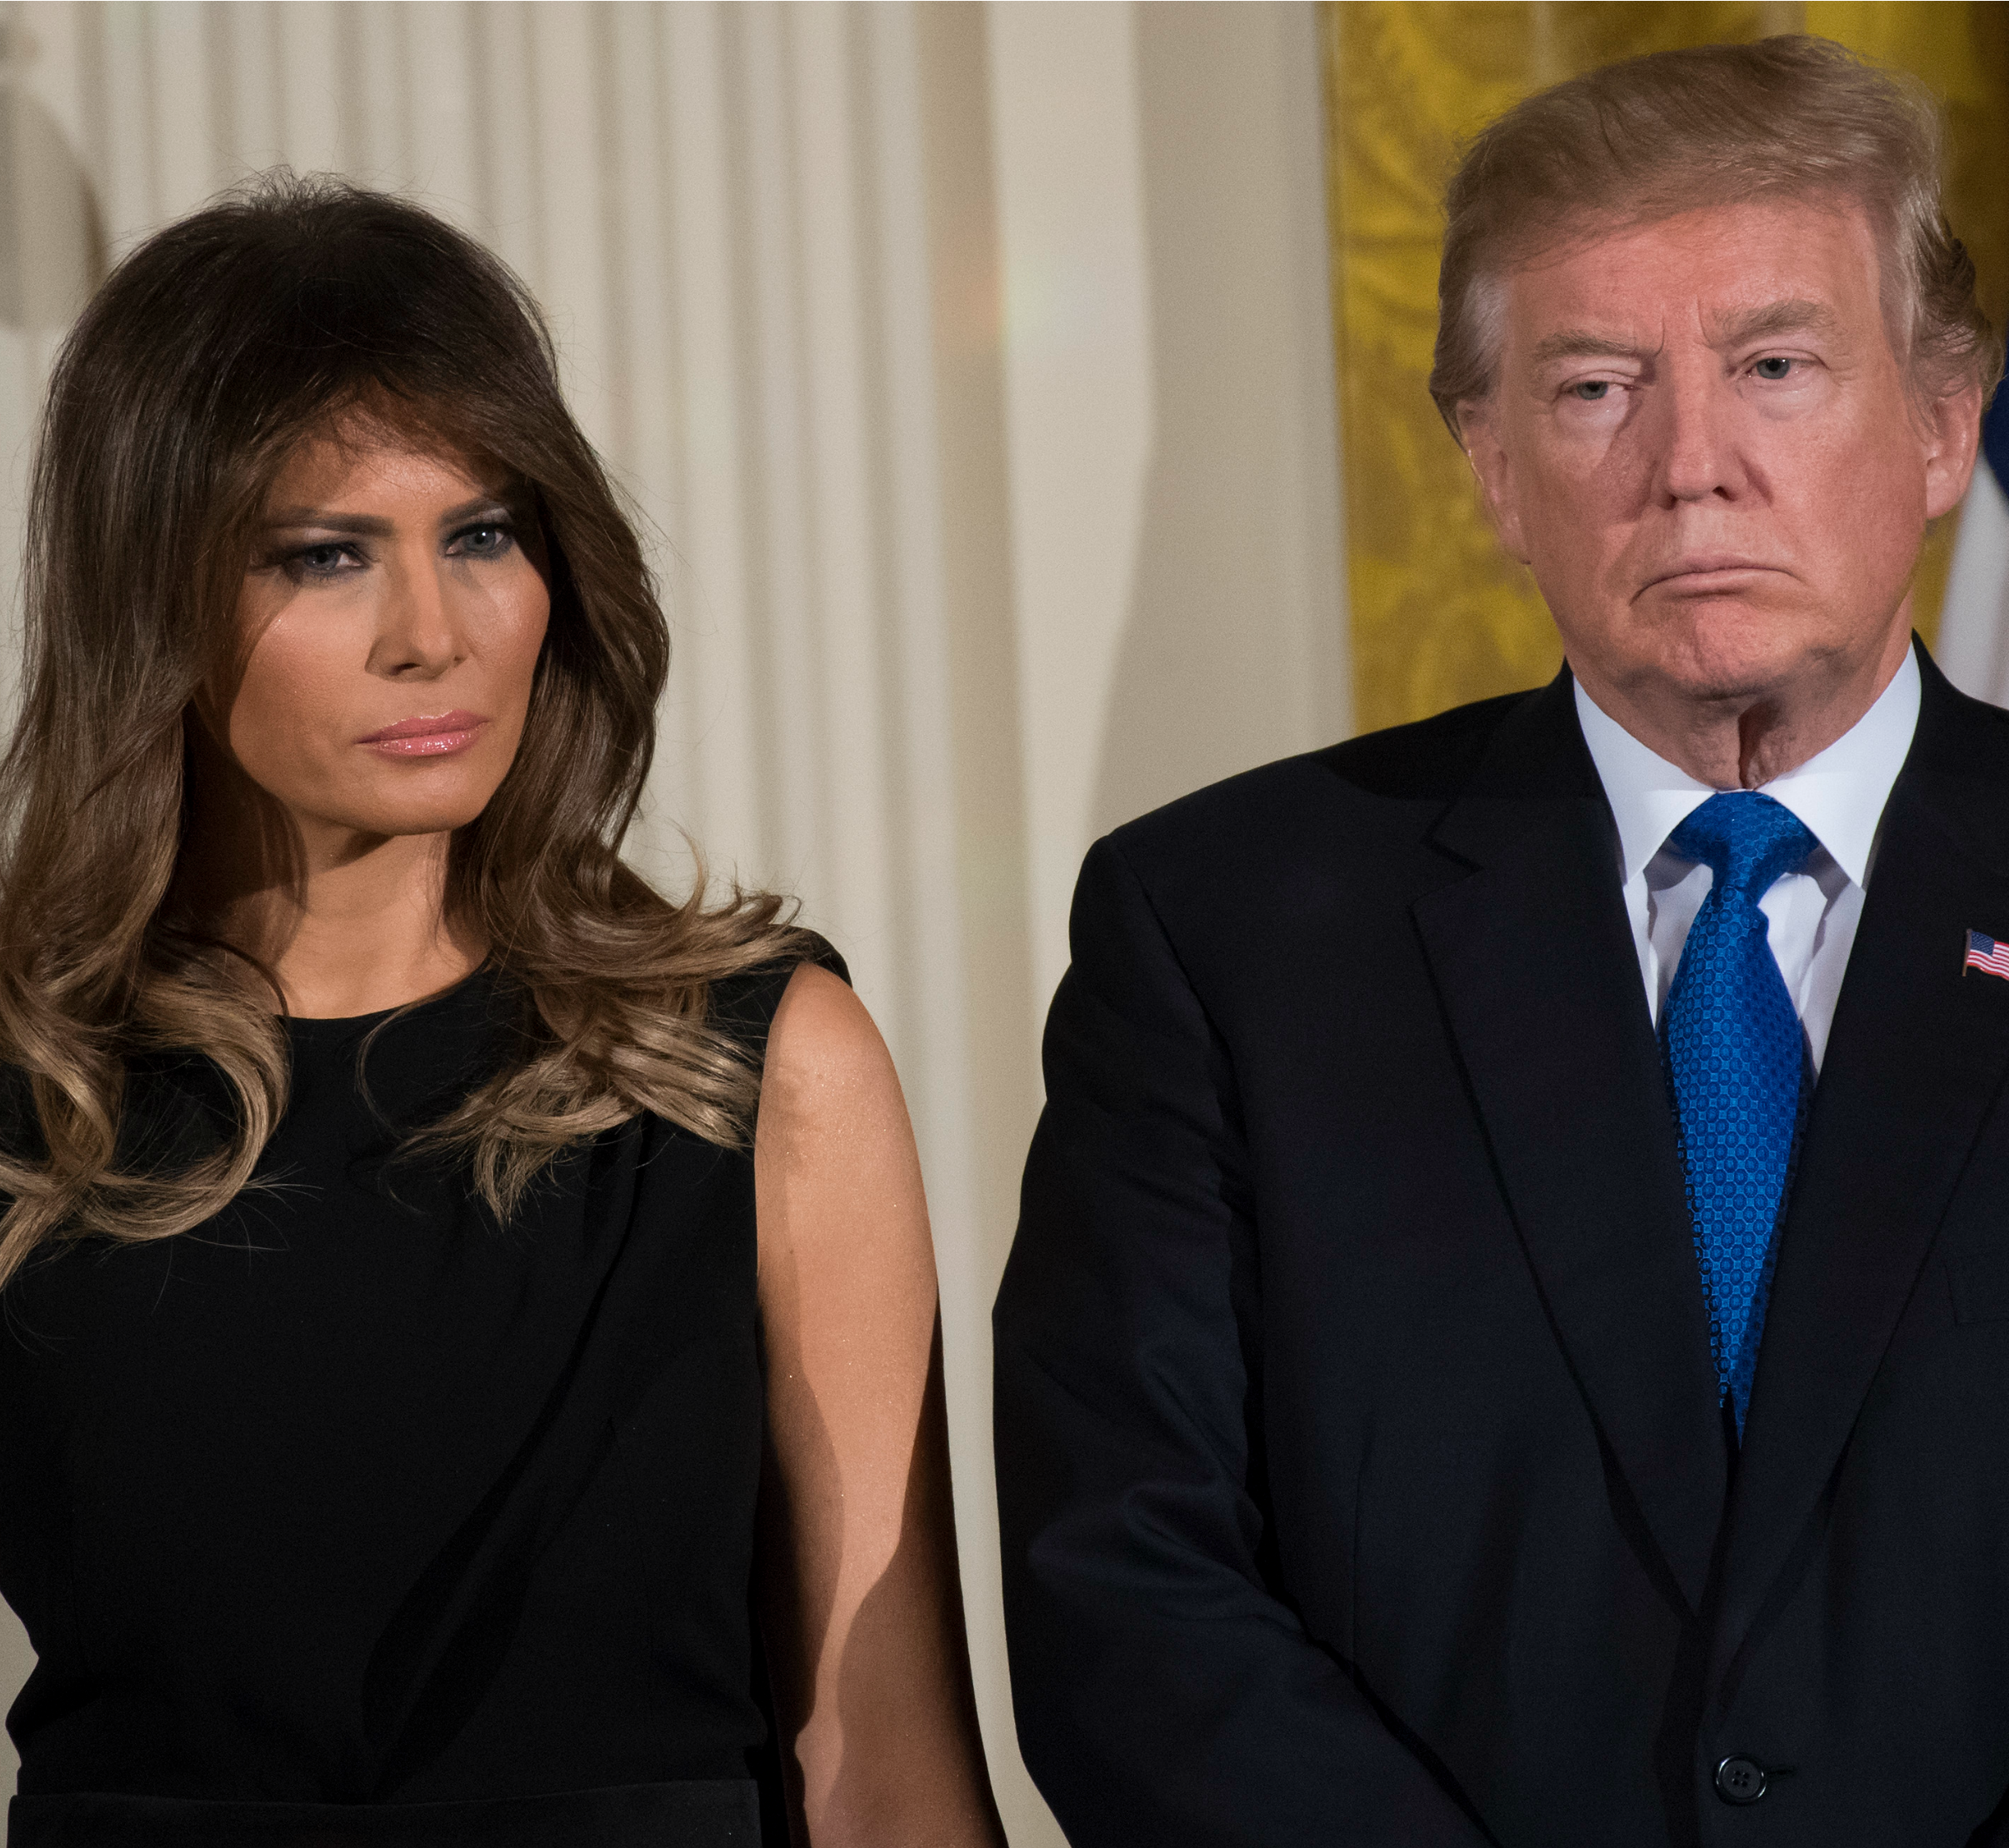 LISTEN: Is the President having an affair right now?